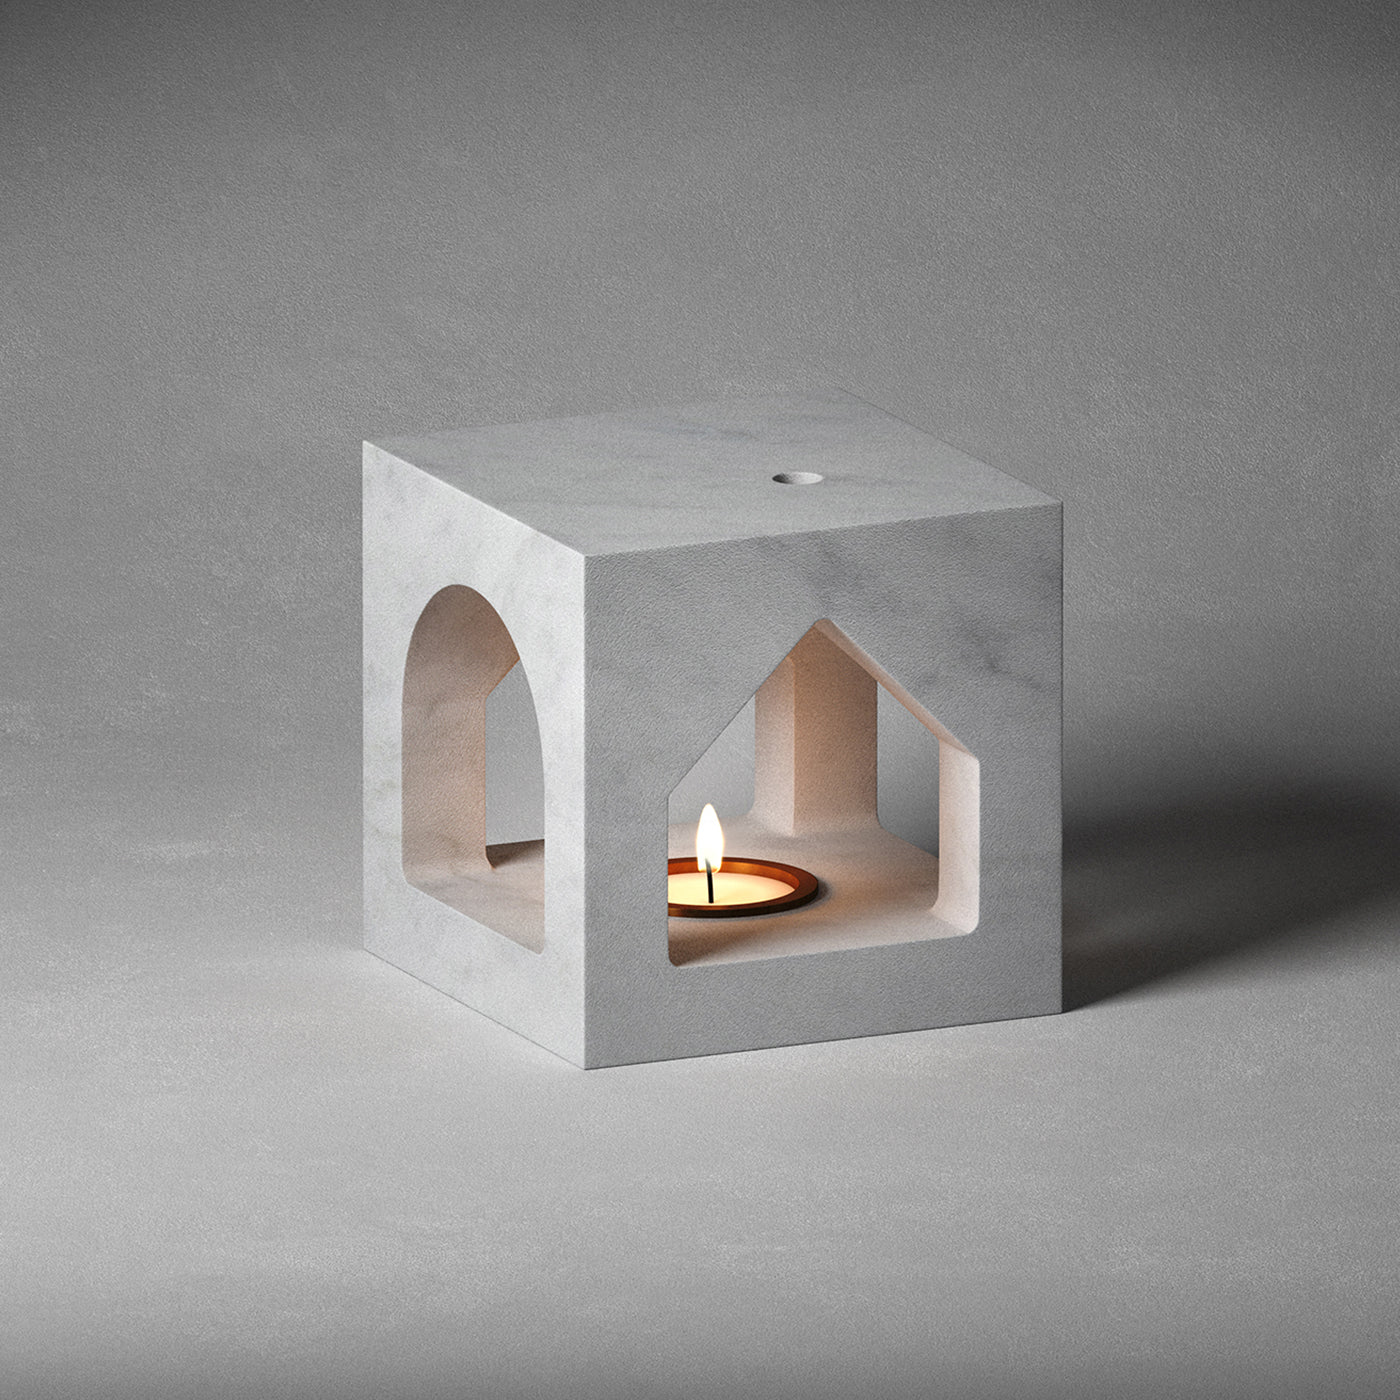 The Village - MA House Carrara Candleholder by Kengo Kuma - Alternative view 1